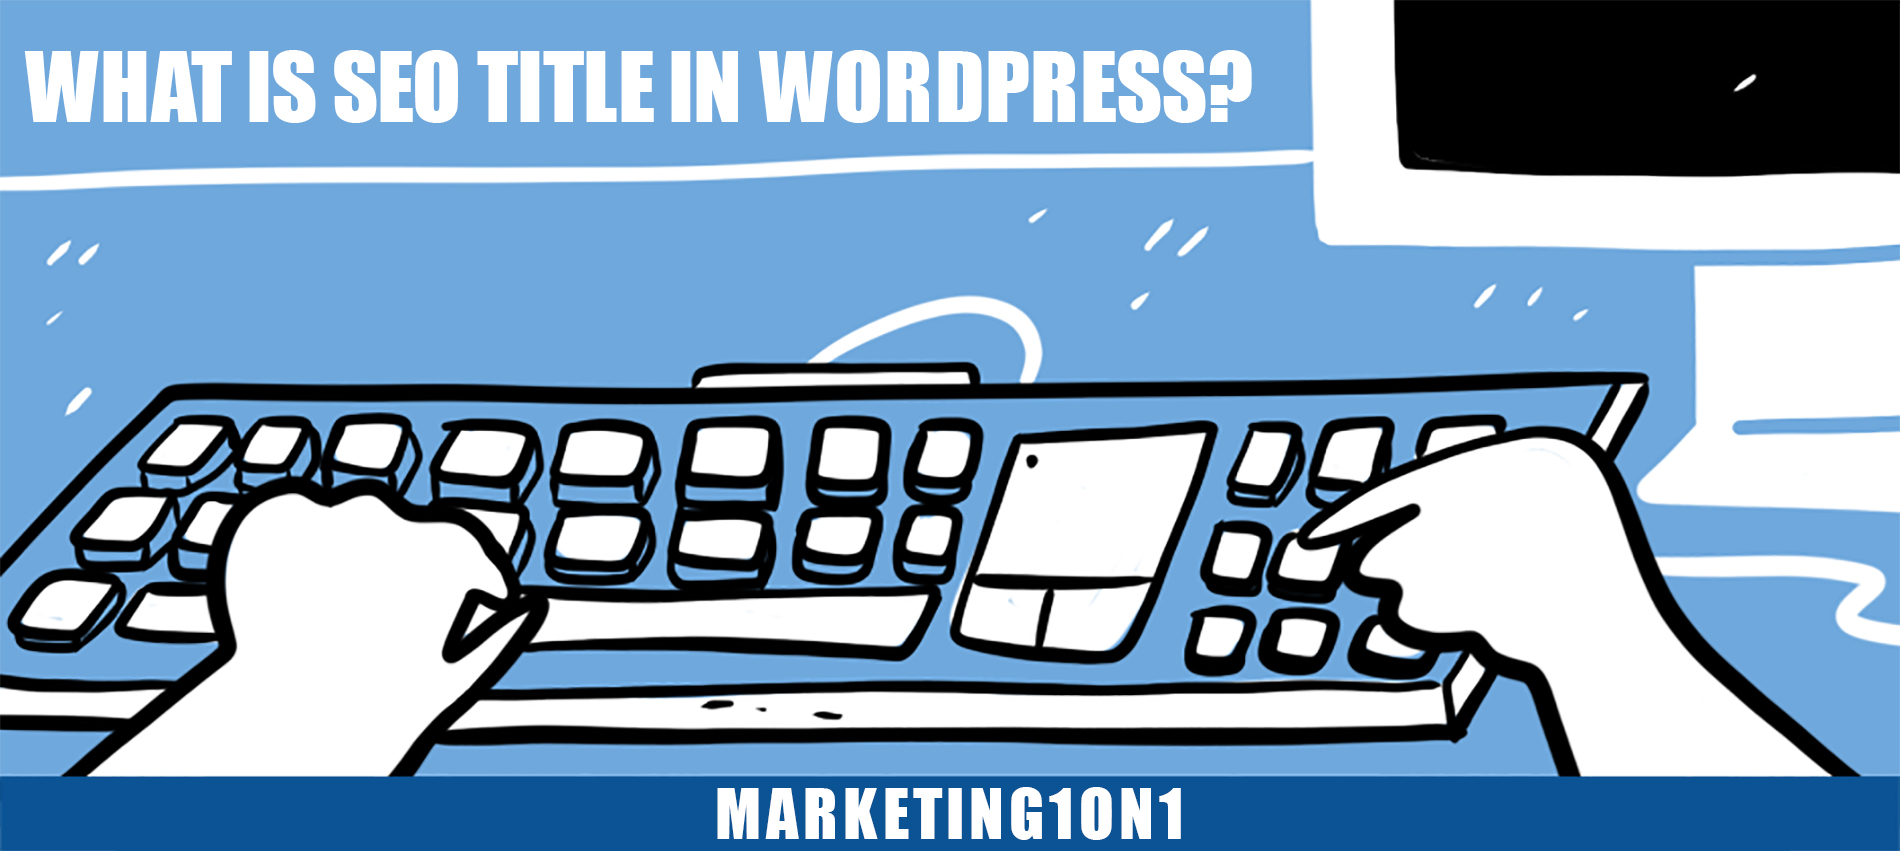 What is SEO title in WordPress?